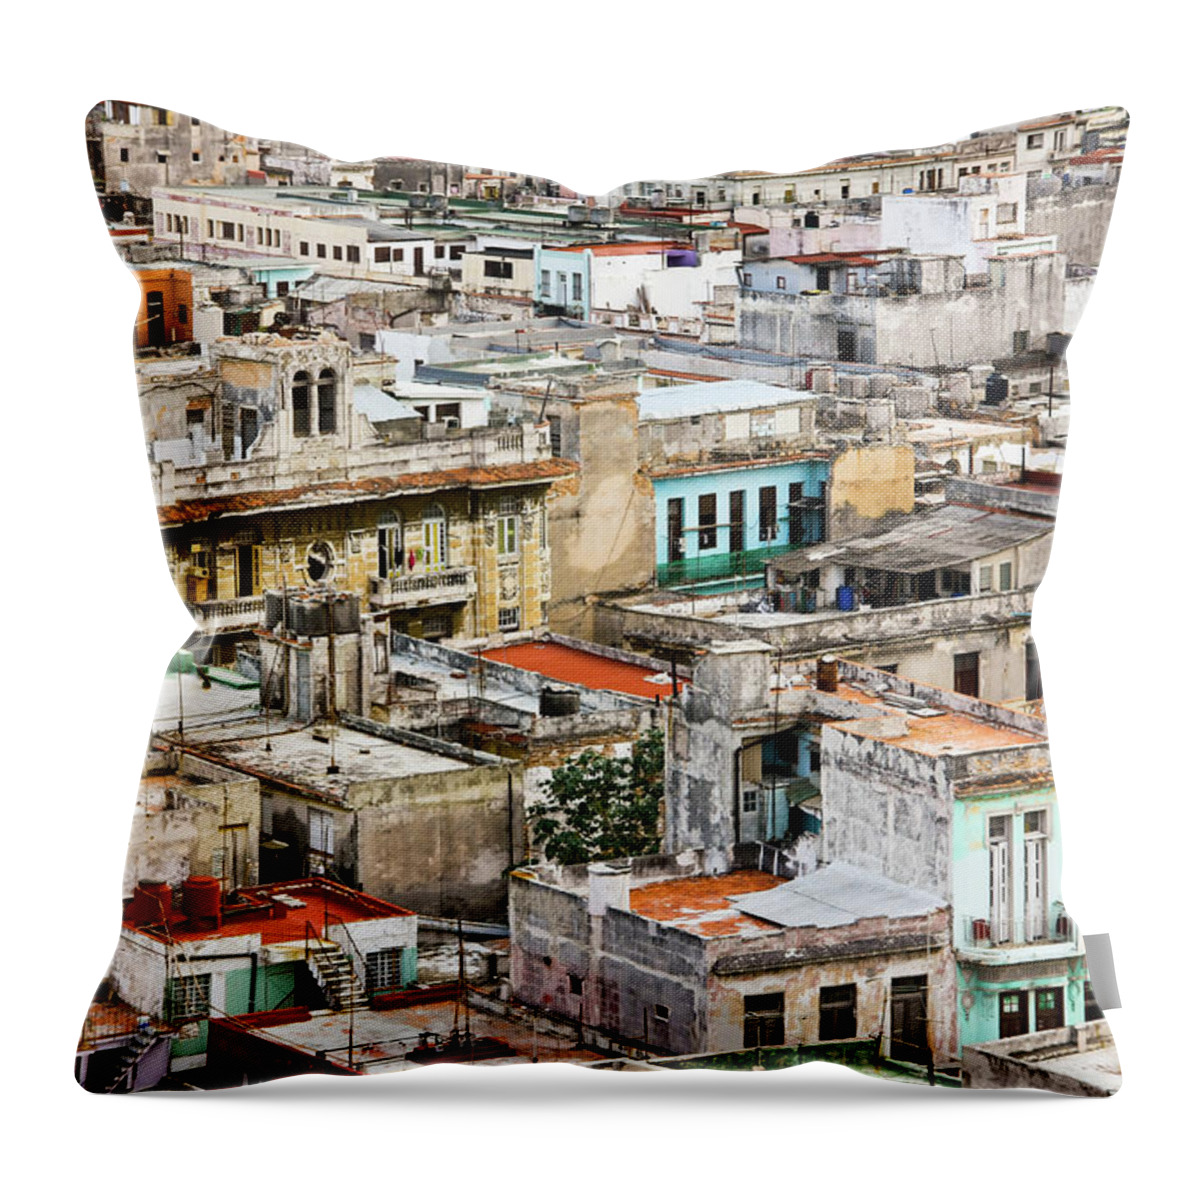 Tranquility Throw Pillow featuring the photograph Old Havana In Cuba by Gerardo Ricardo López